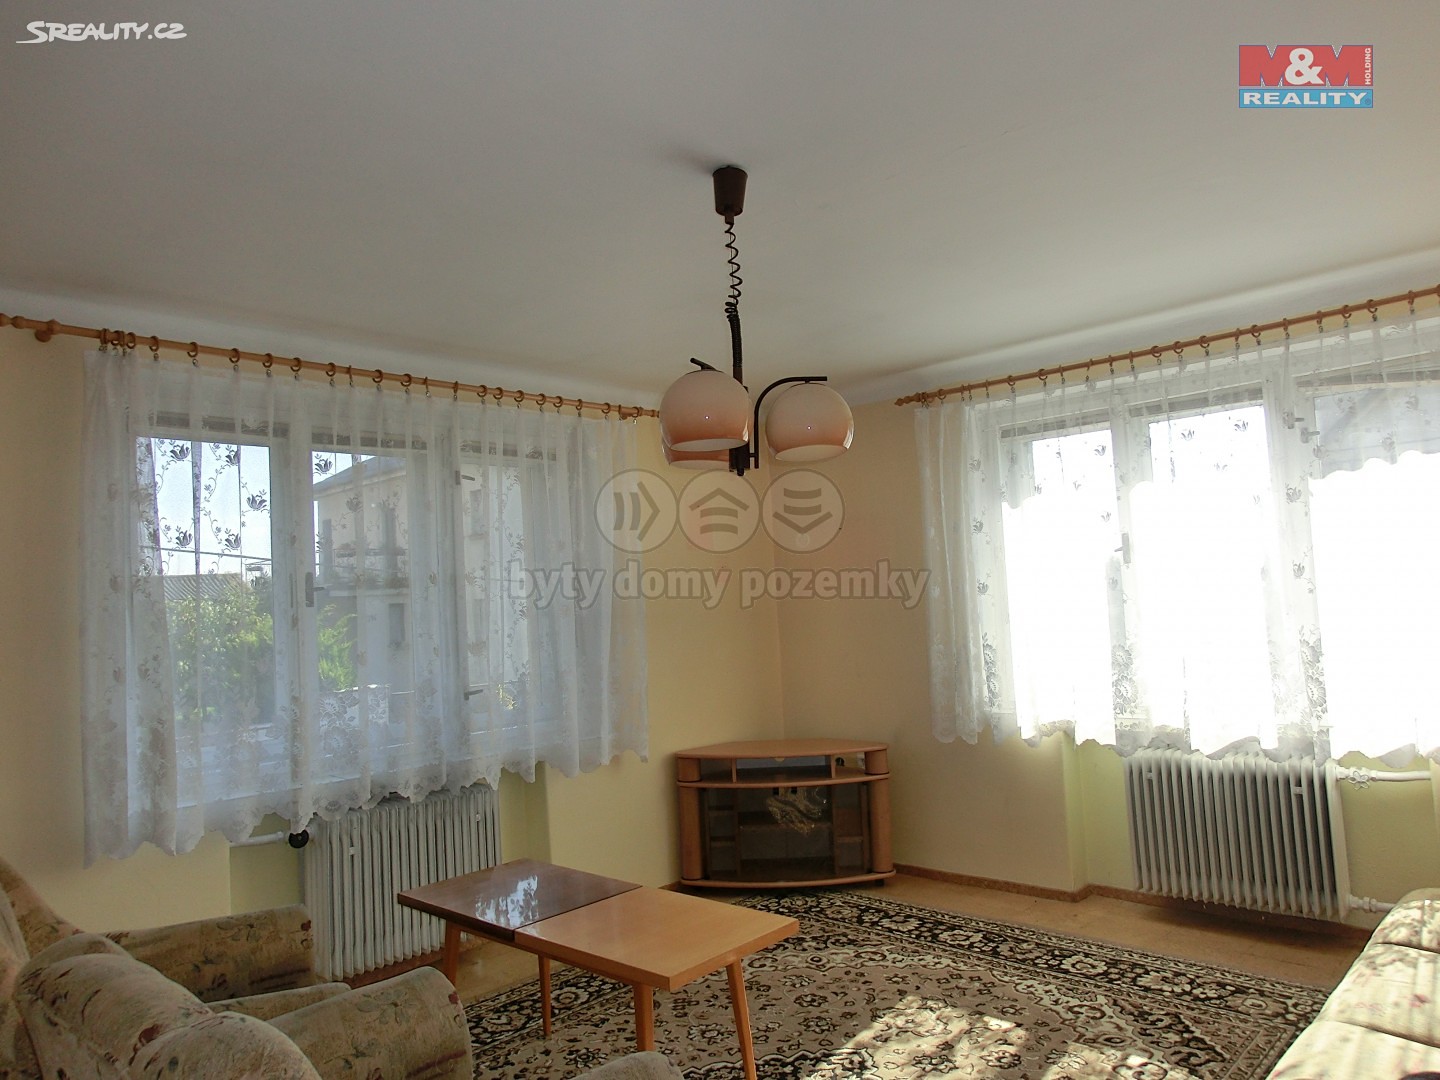 Prodej  rodinného domu 150 m², pozemek 827 m², Trhový Štěpánov, okres Benešov